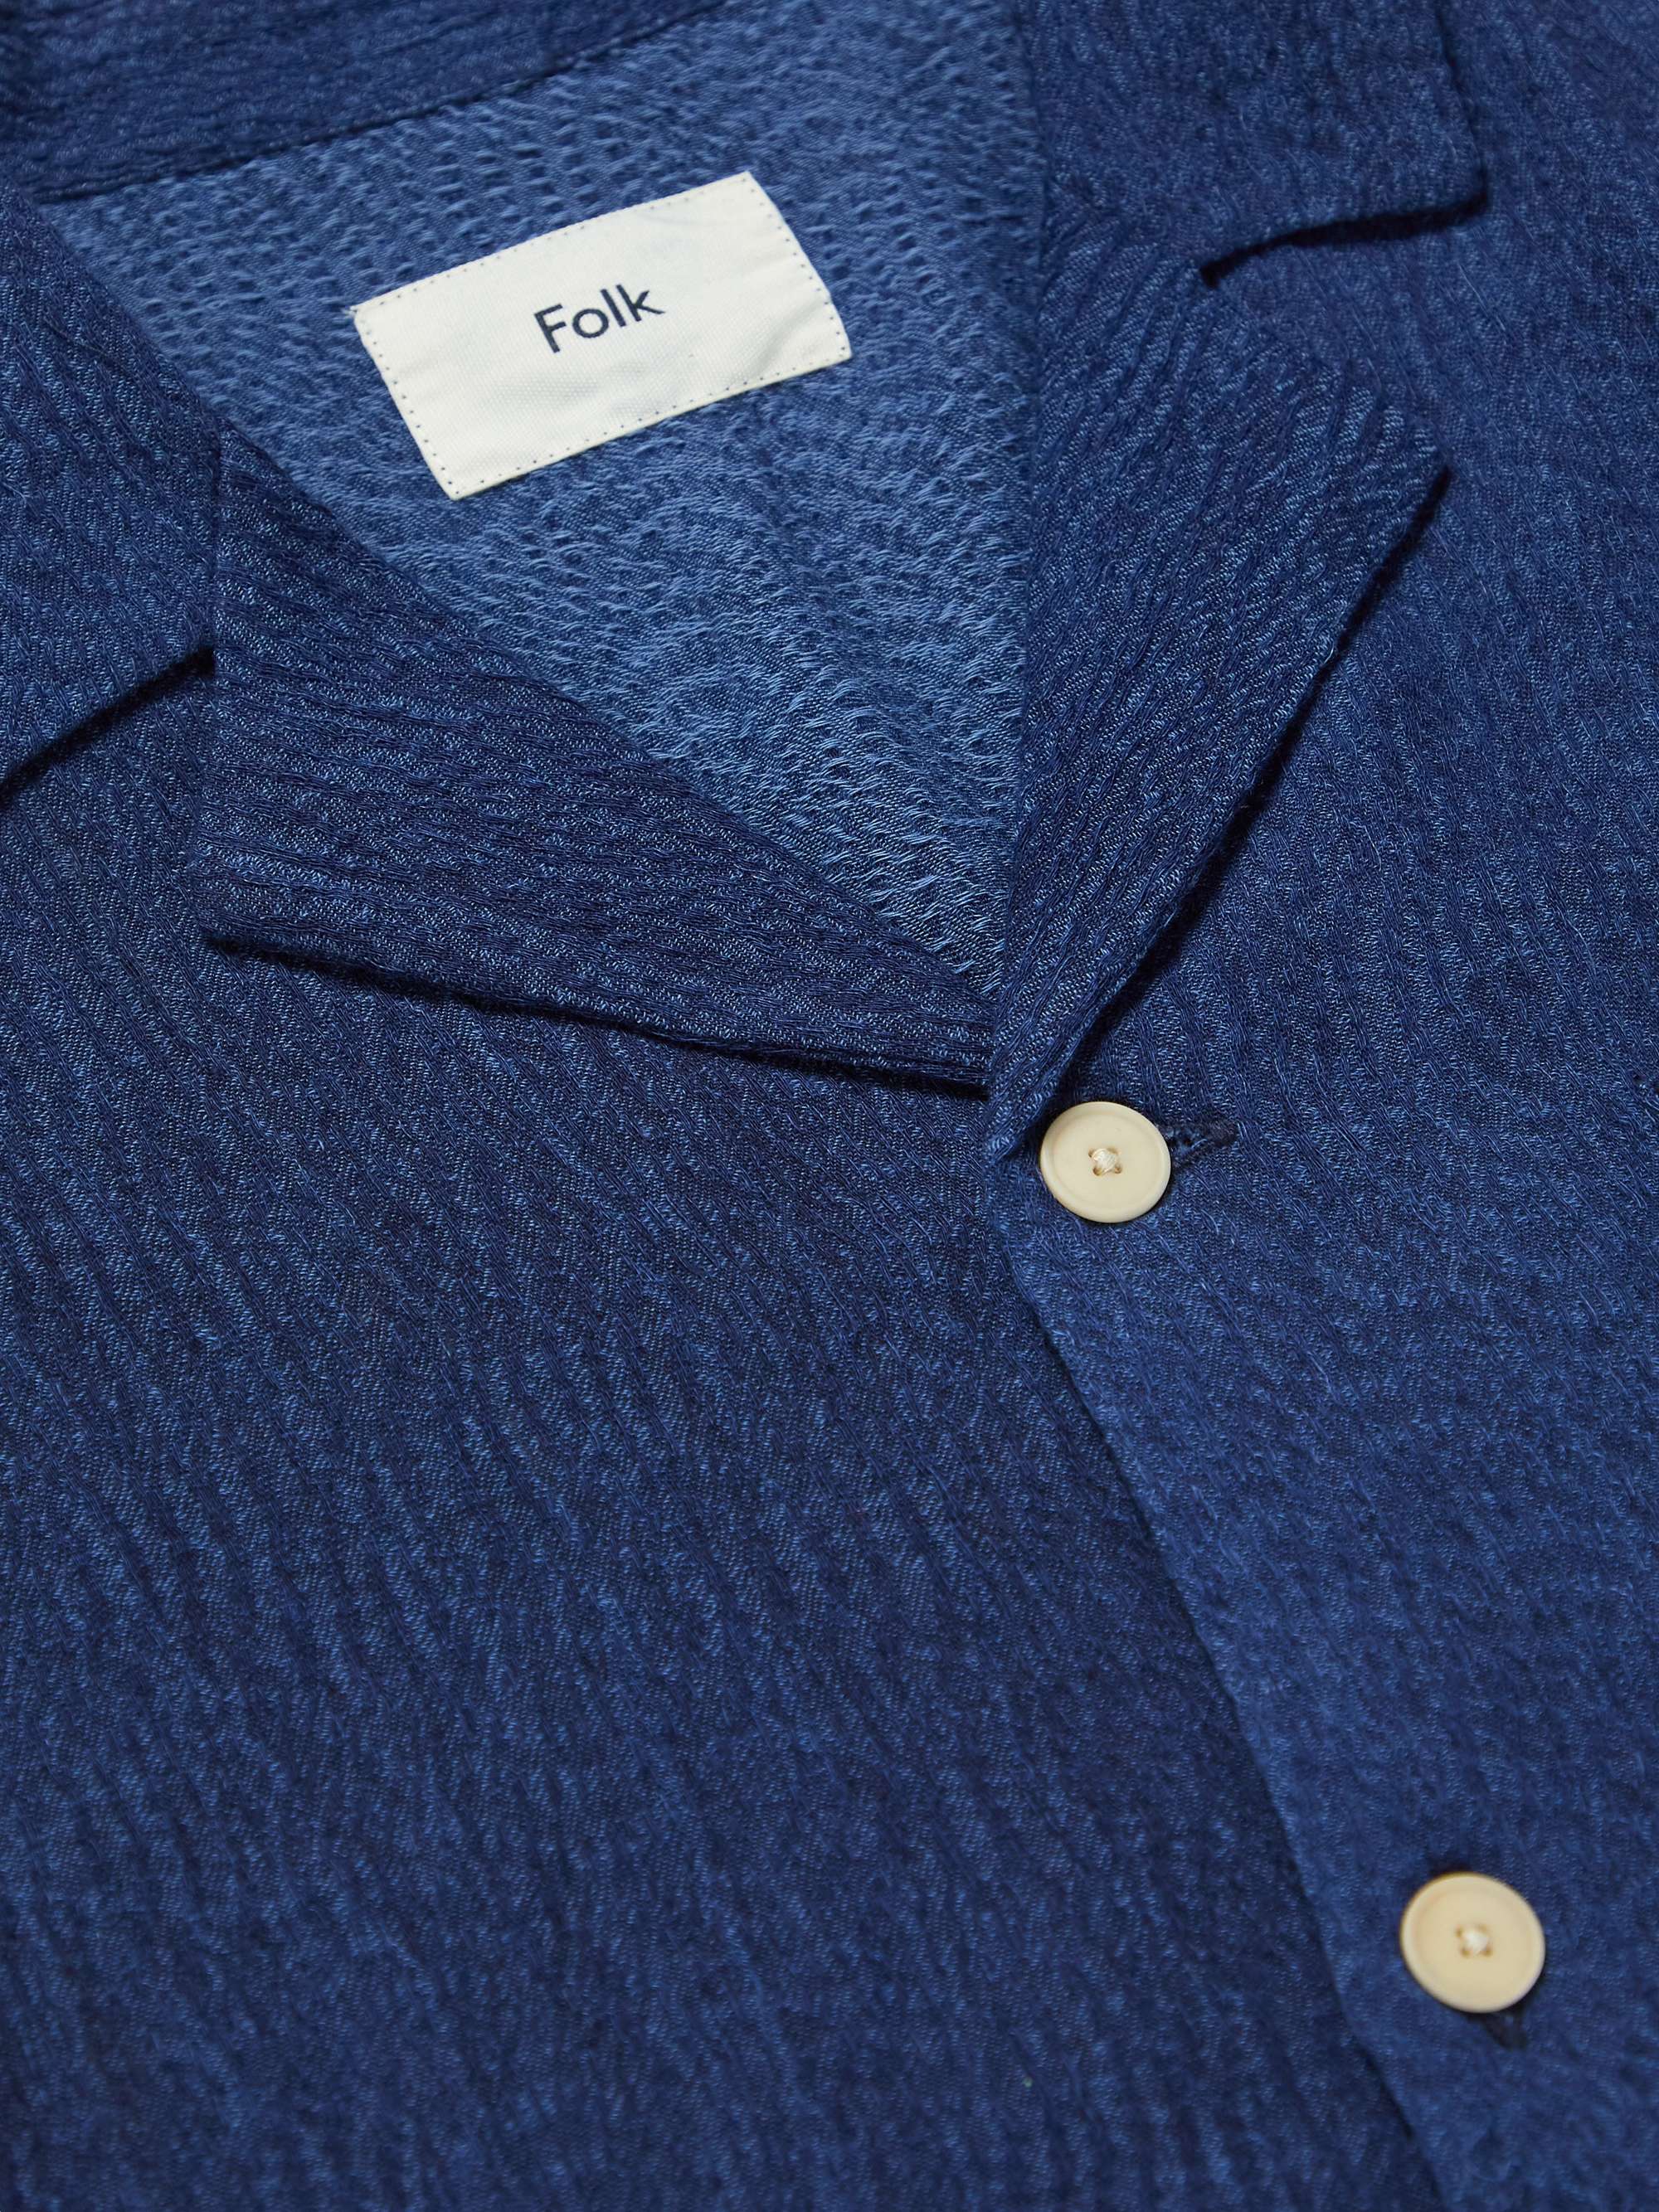 FOLK + Damien Poulain Camp-Collar Printed Linen Shirt